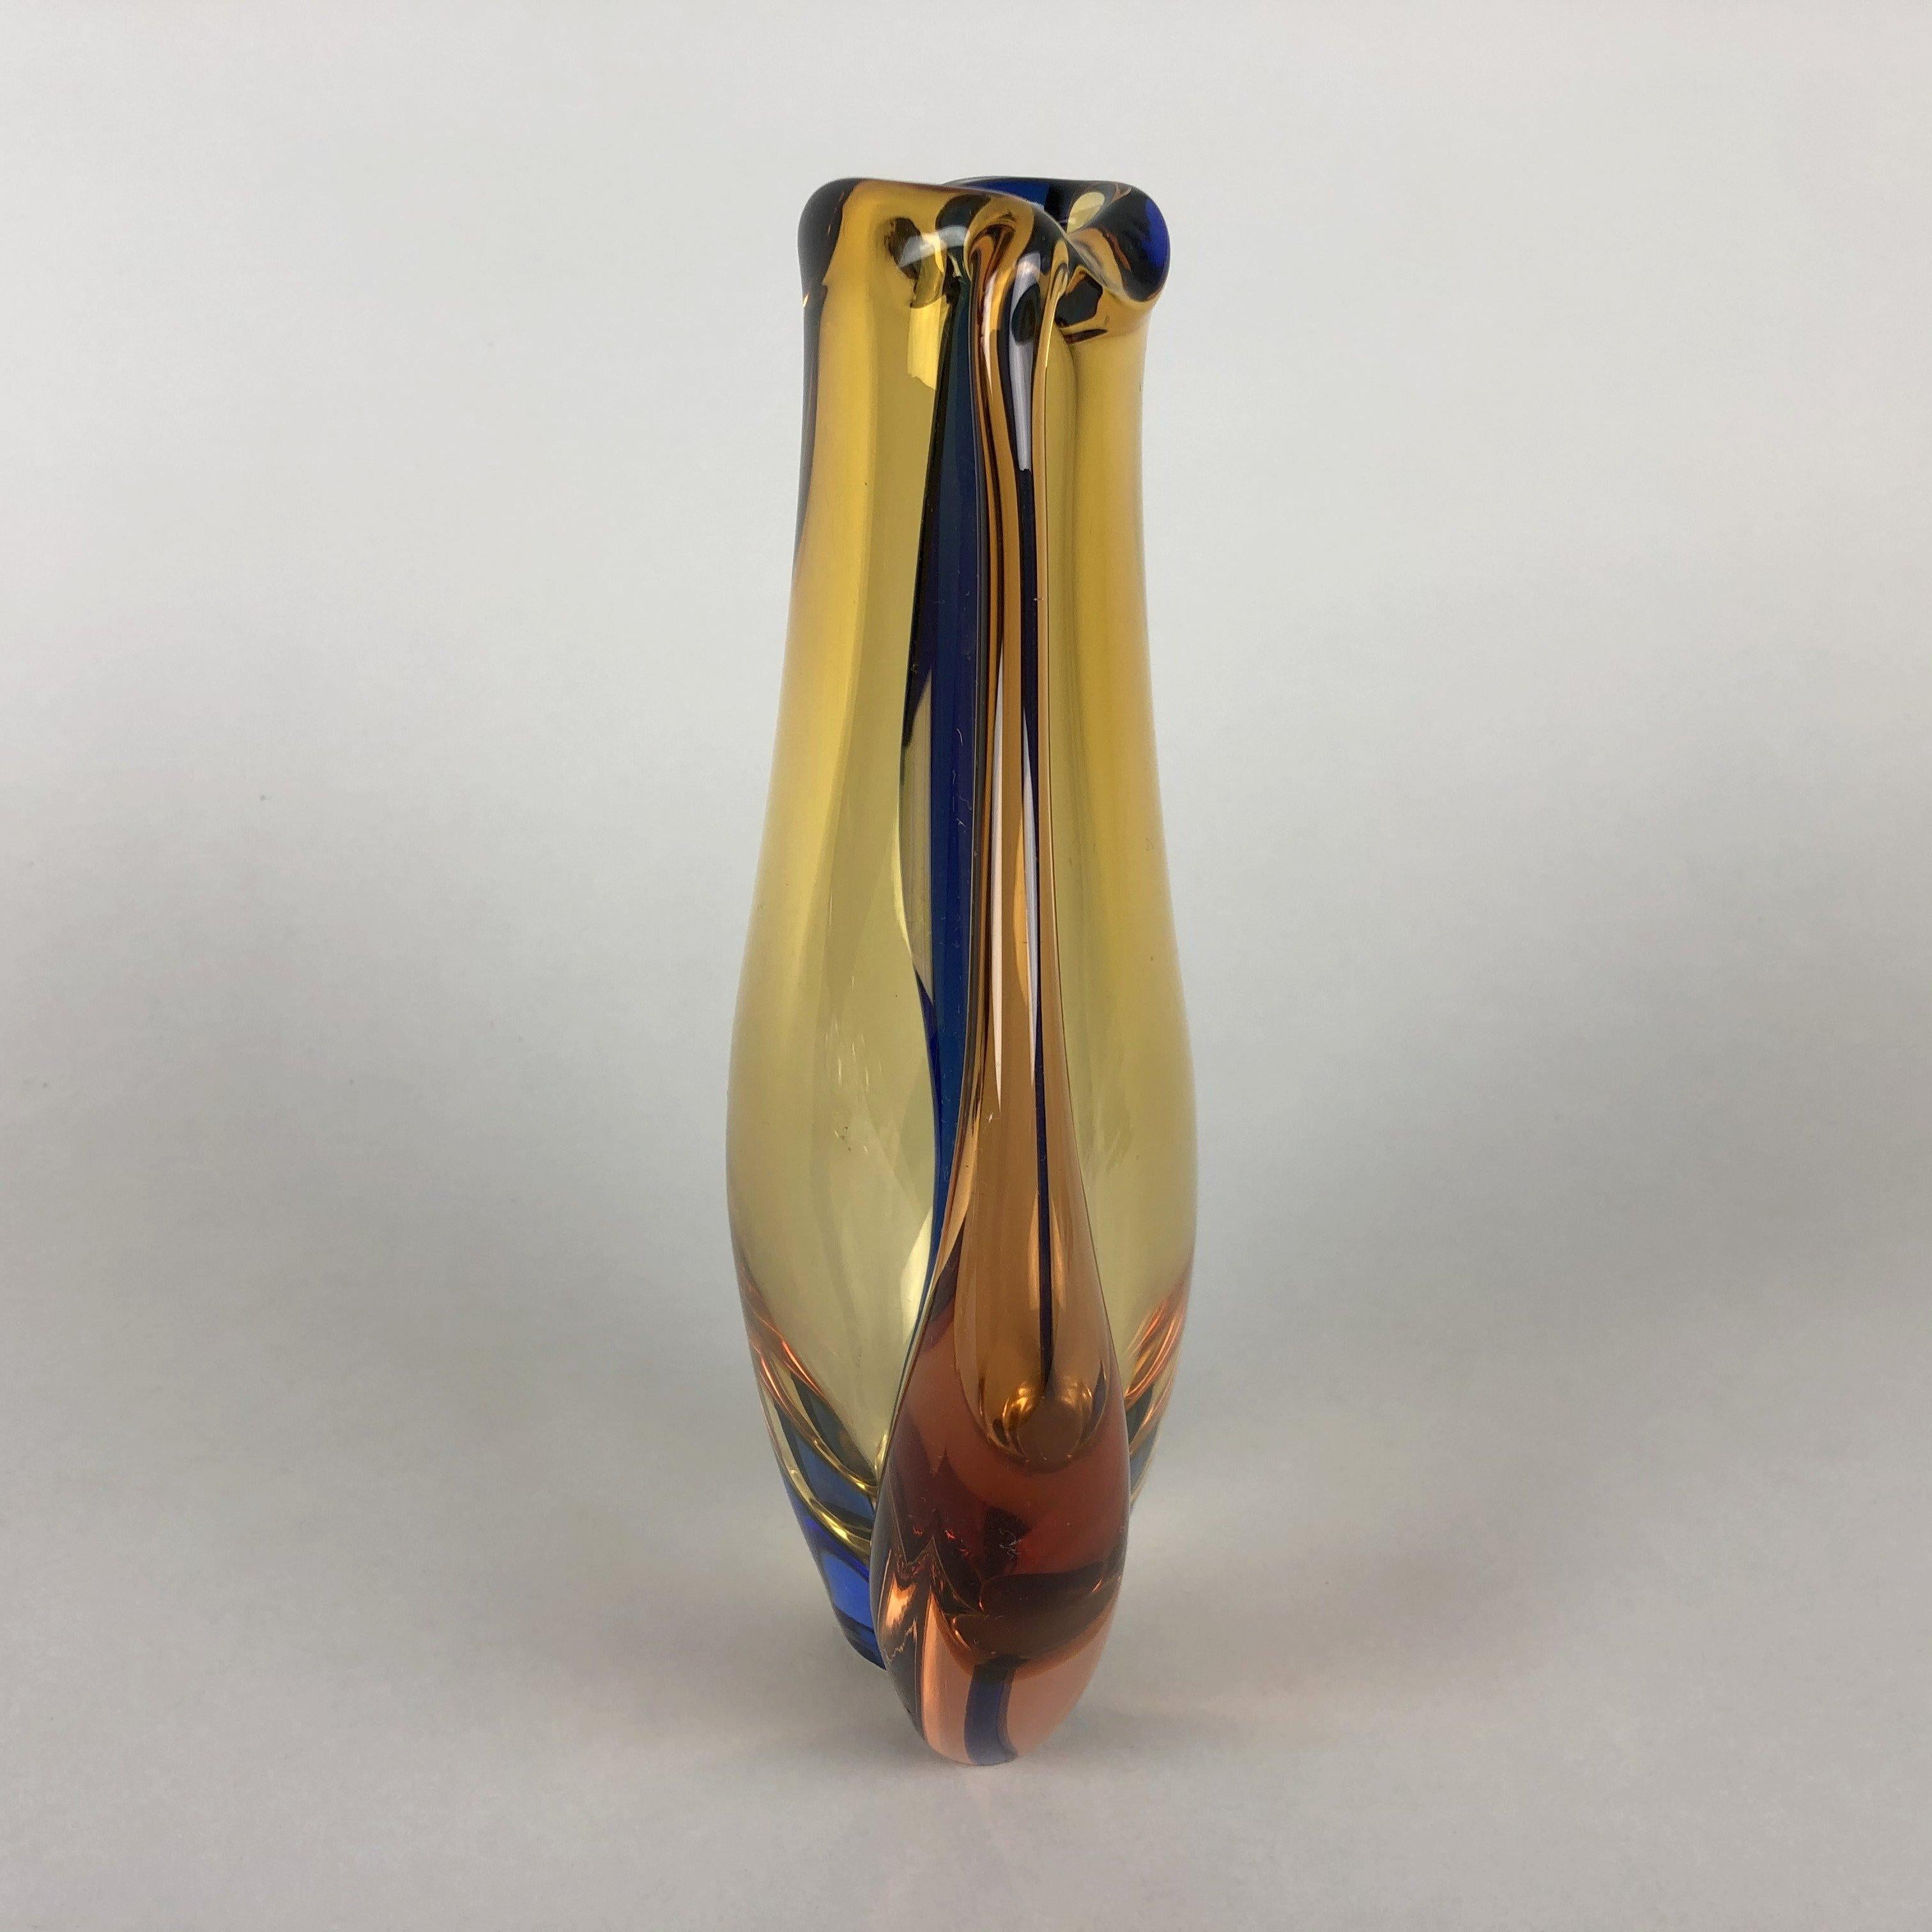 Mid-Century Modern Art Glass Vase by Hana Machovska for Mstisov Glassworks, Czechoslovakia, 1960s For Sale